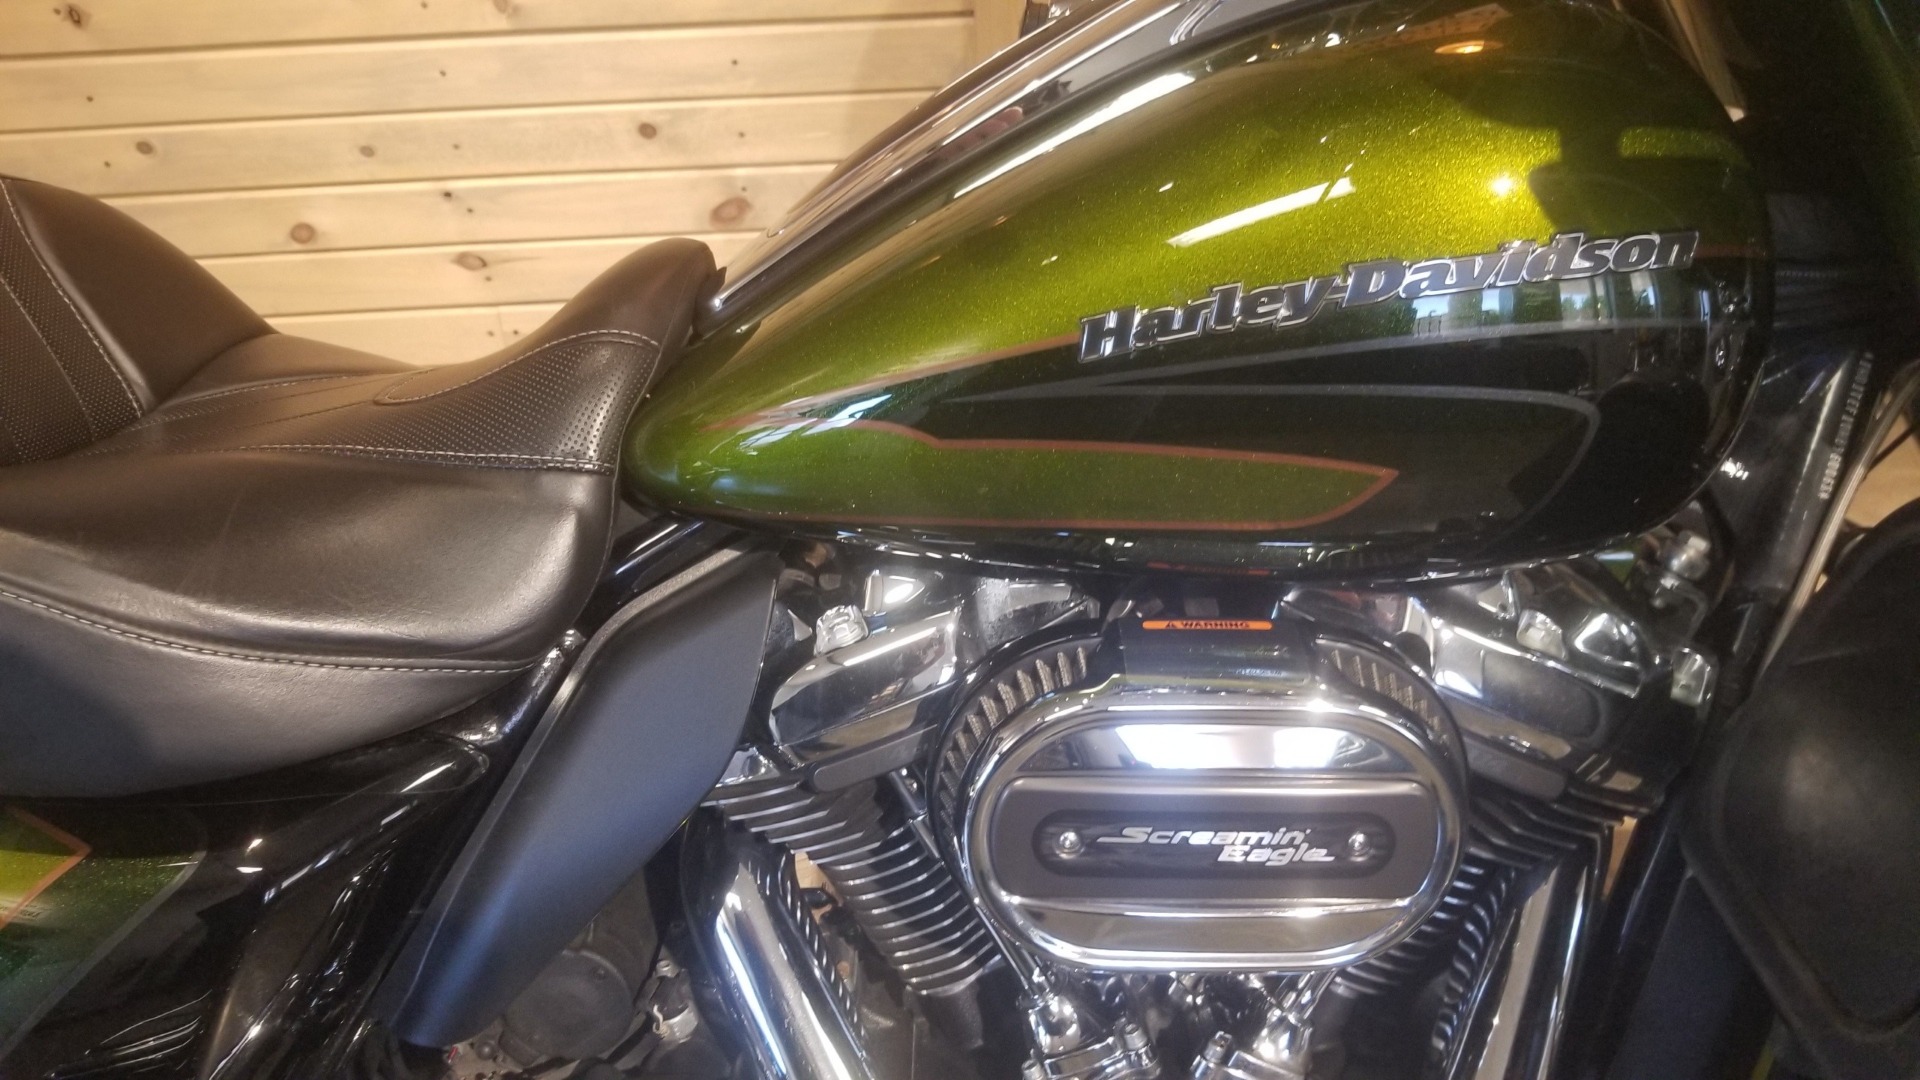 2017 Harley-Davidson CVO™ Limited in Mentor, Ohio - Photo 2